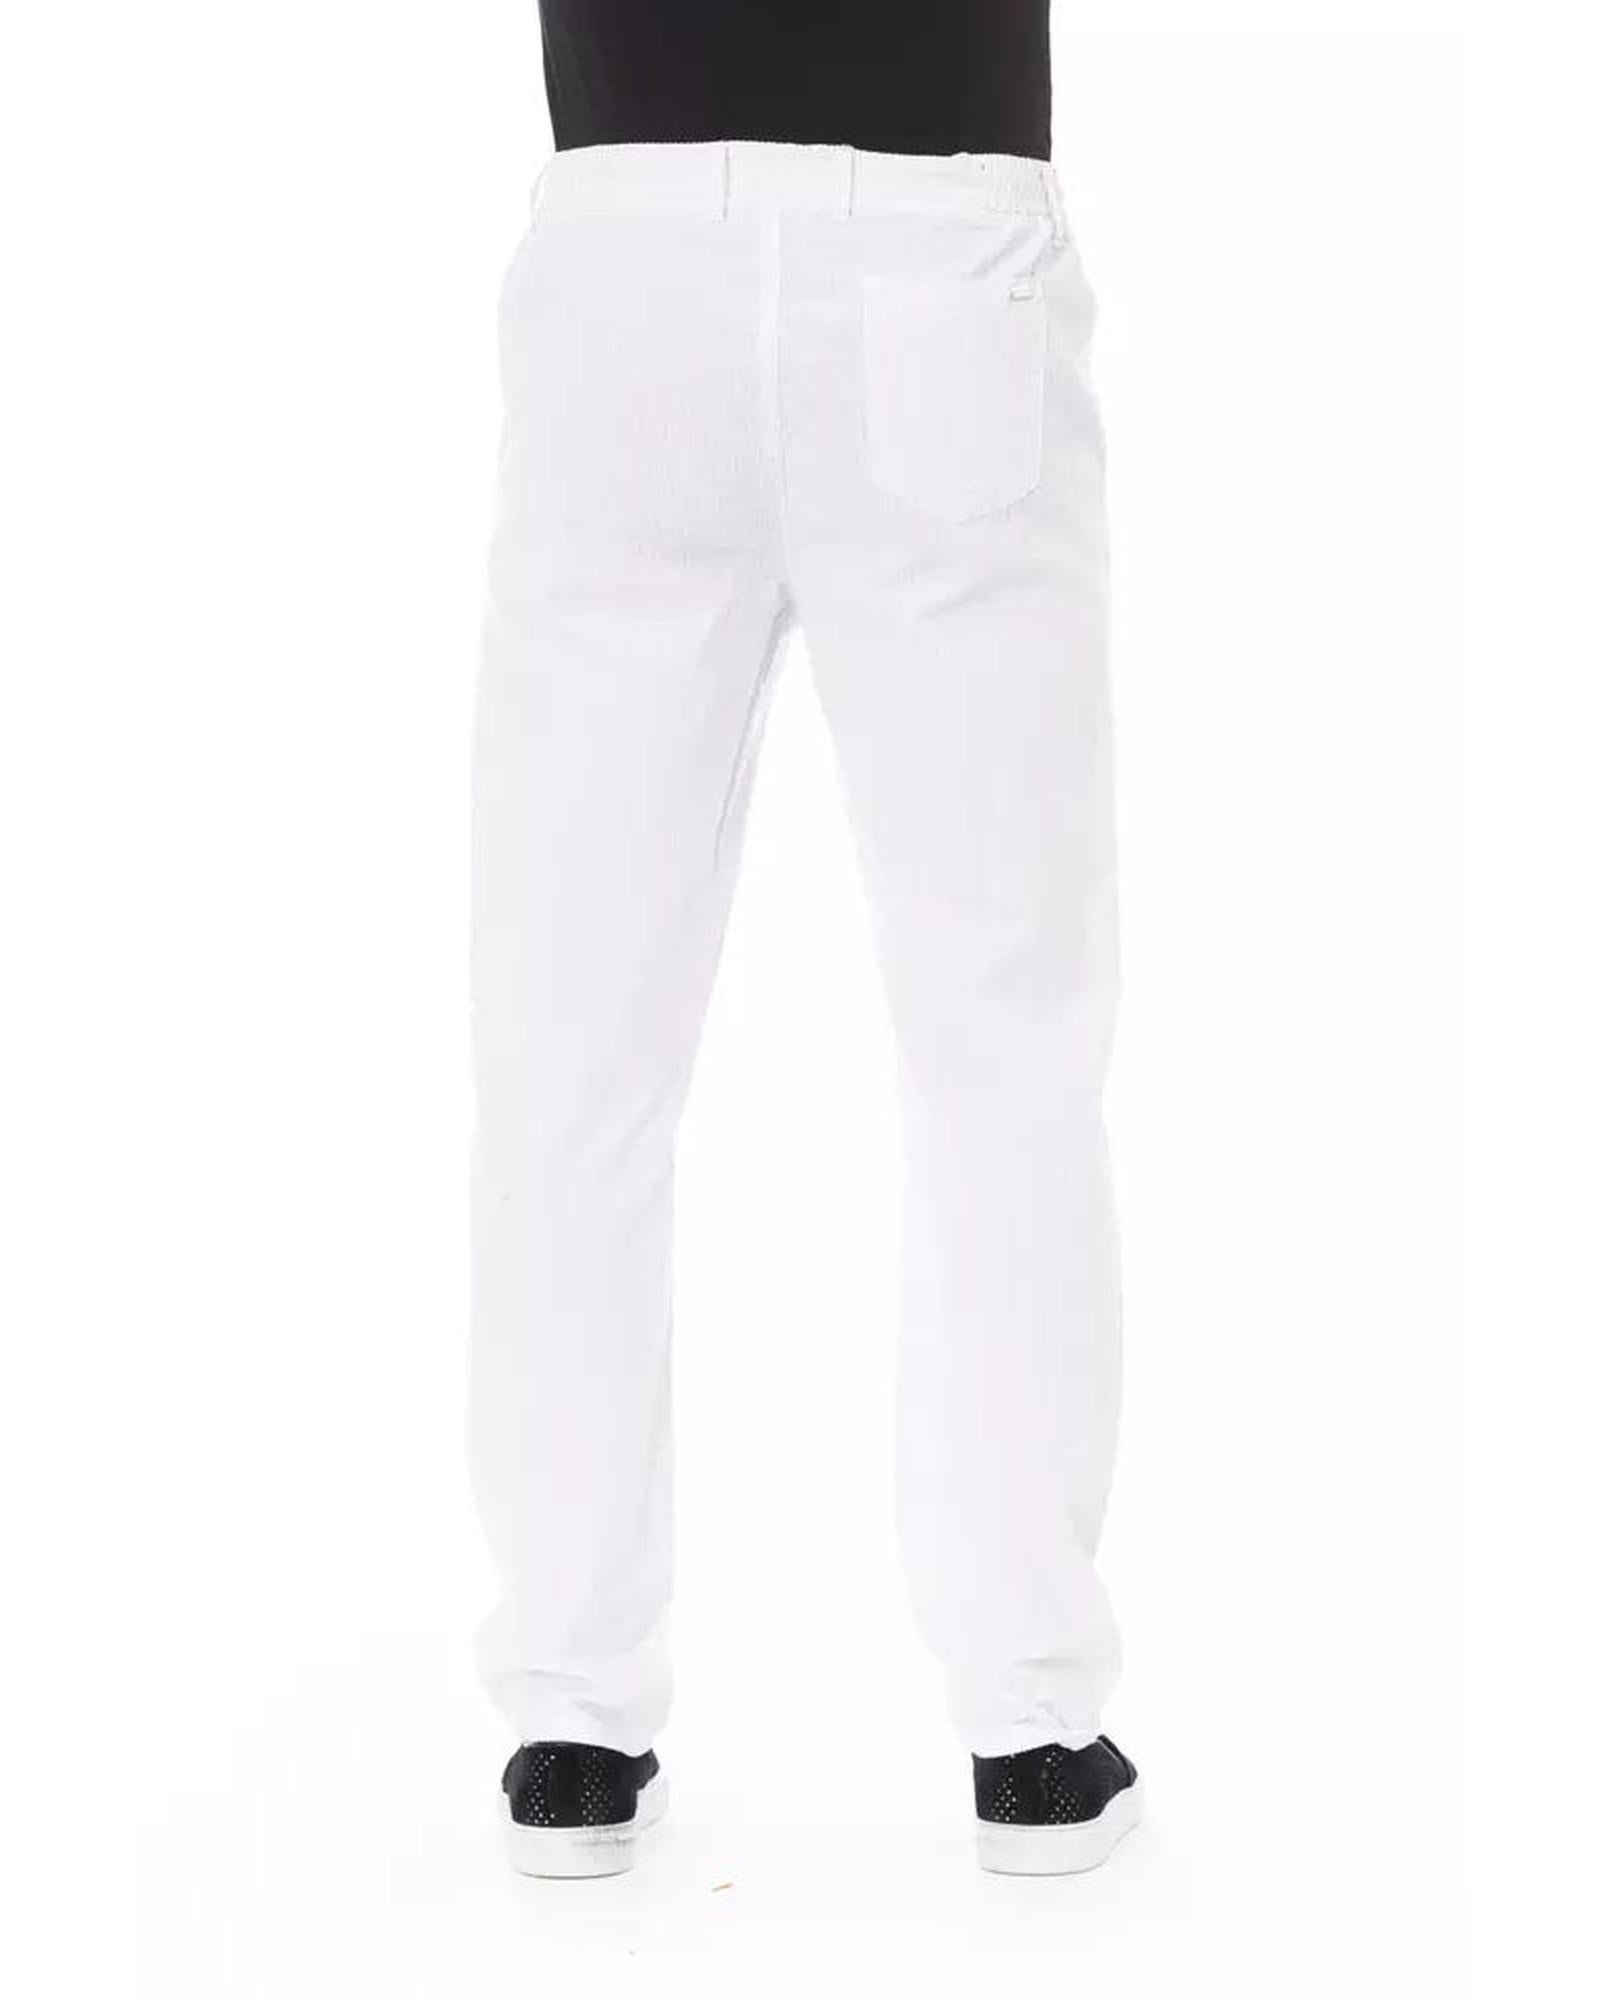 Men's White Cotton Jeans & Pant - W38 US